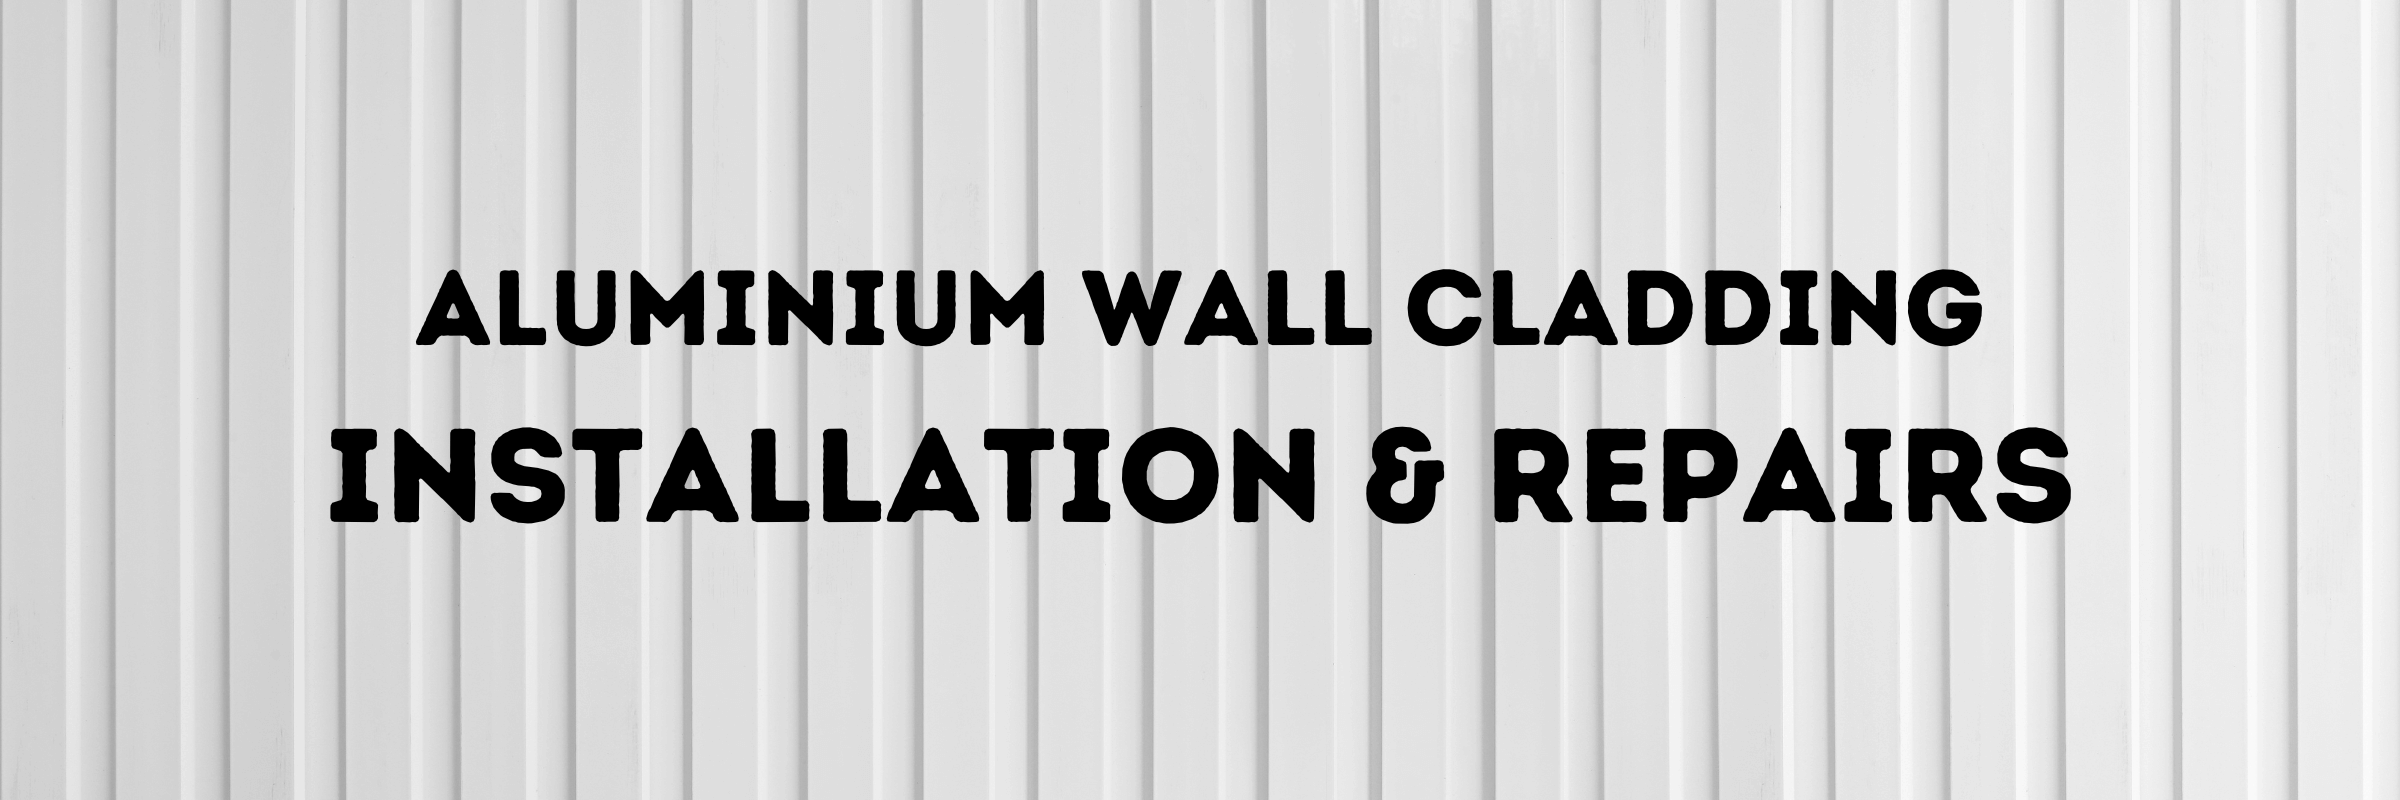 aluminium wall cladding installation on an external building in london